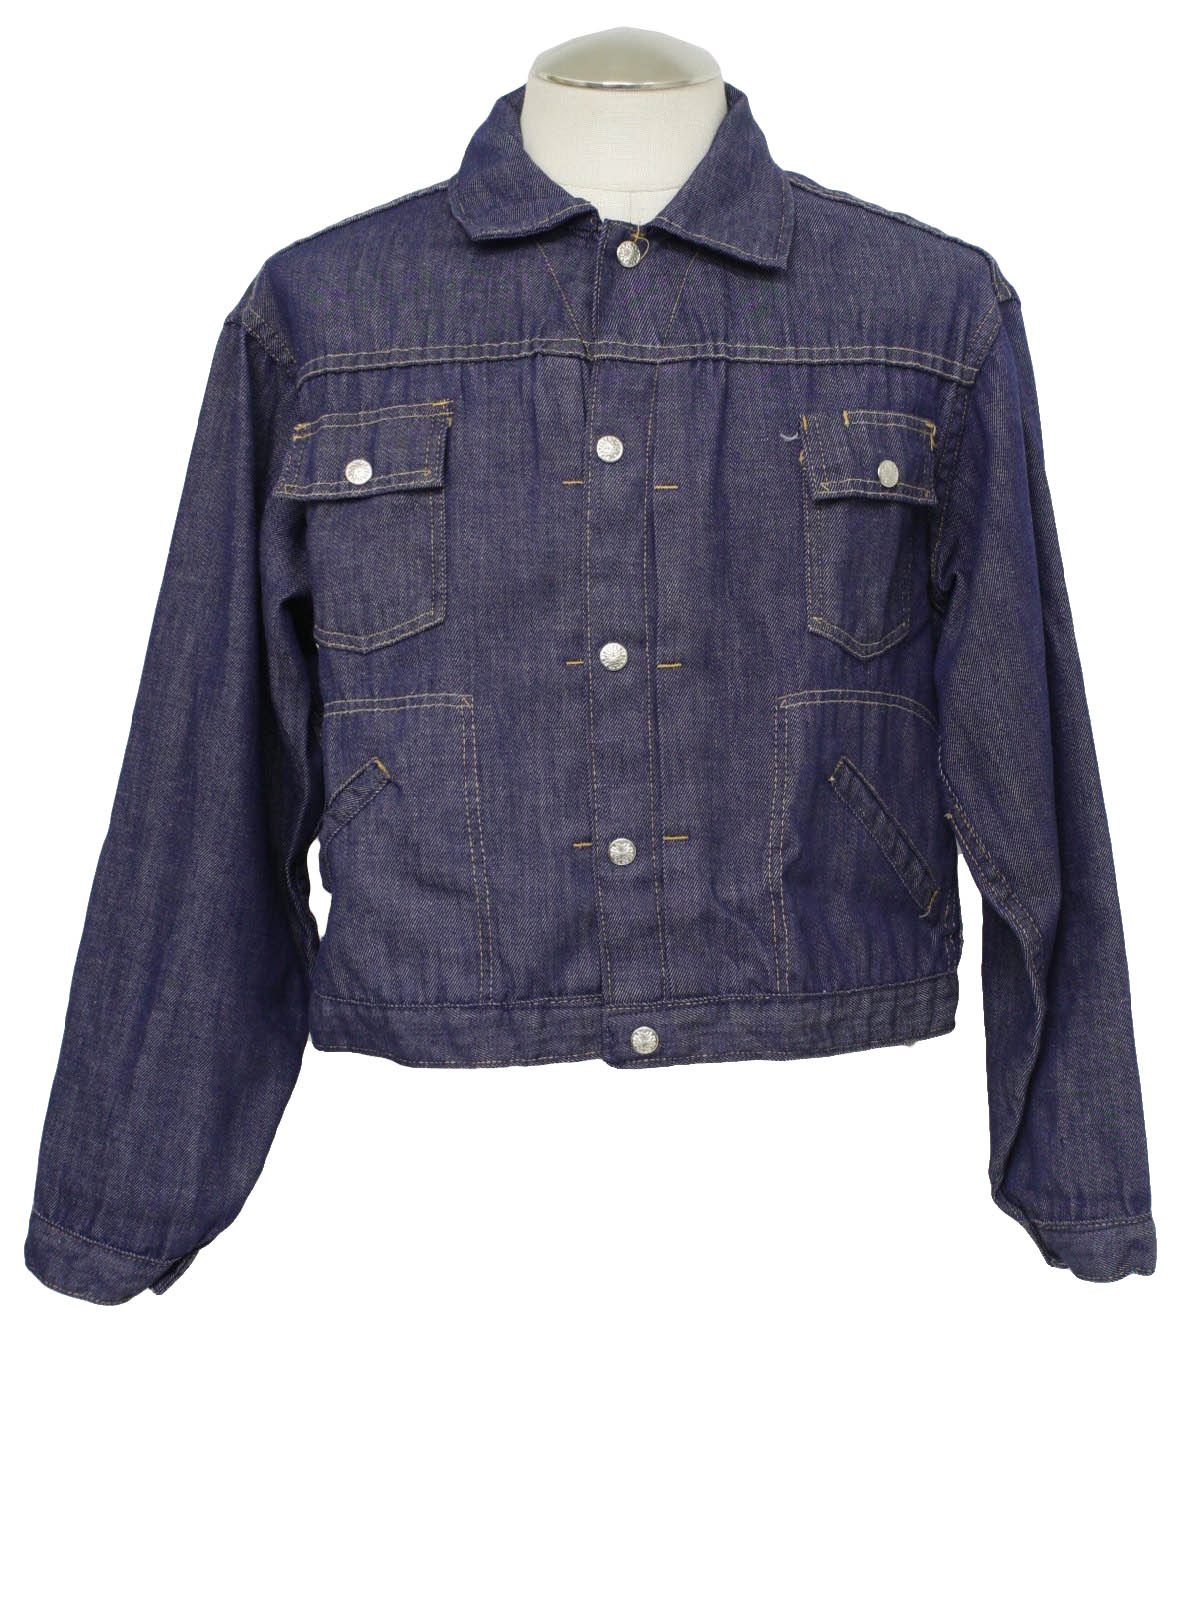 Retro 1960s Jacket: Late 60s -J C Penney Ranchcraft- Mens blue cotton